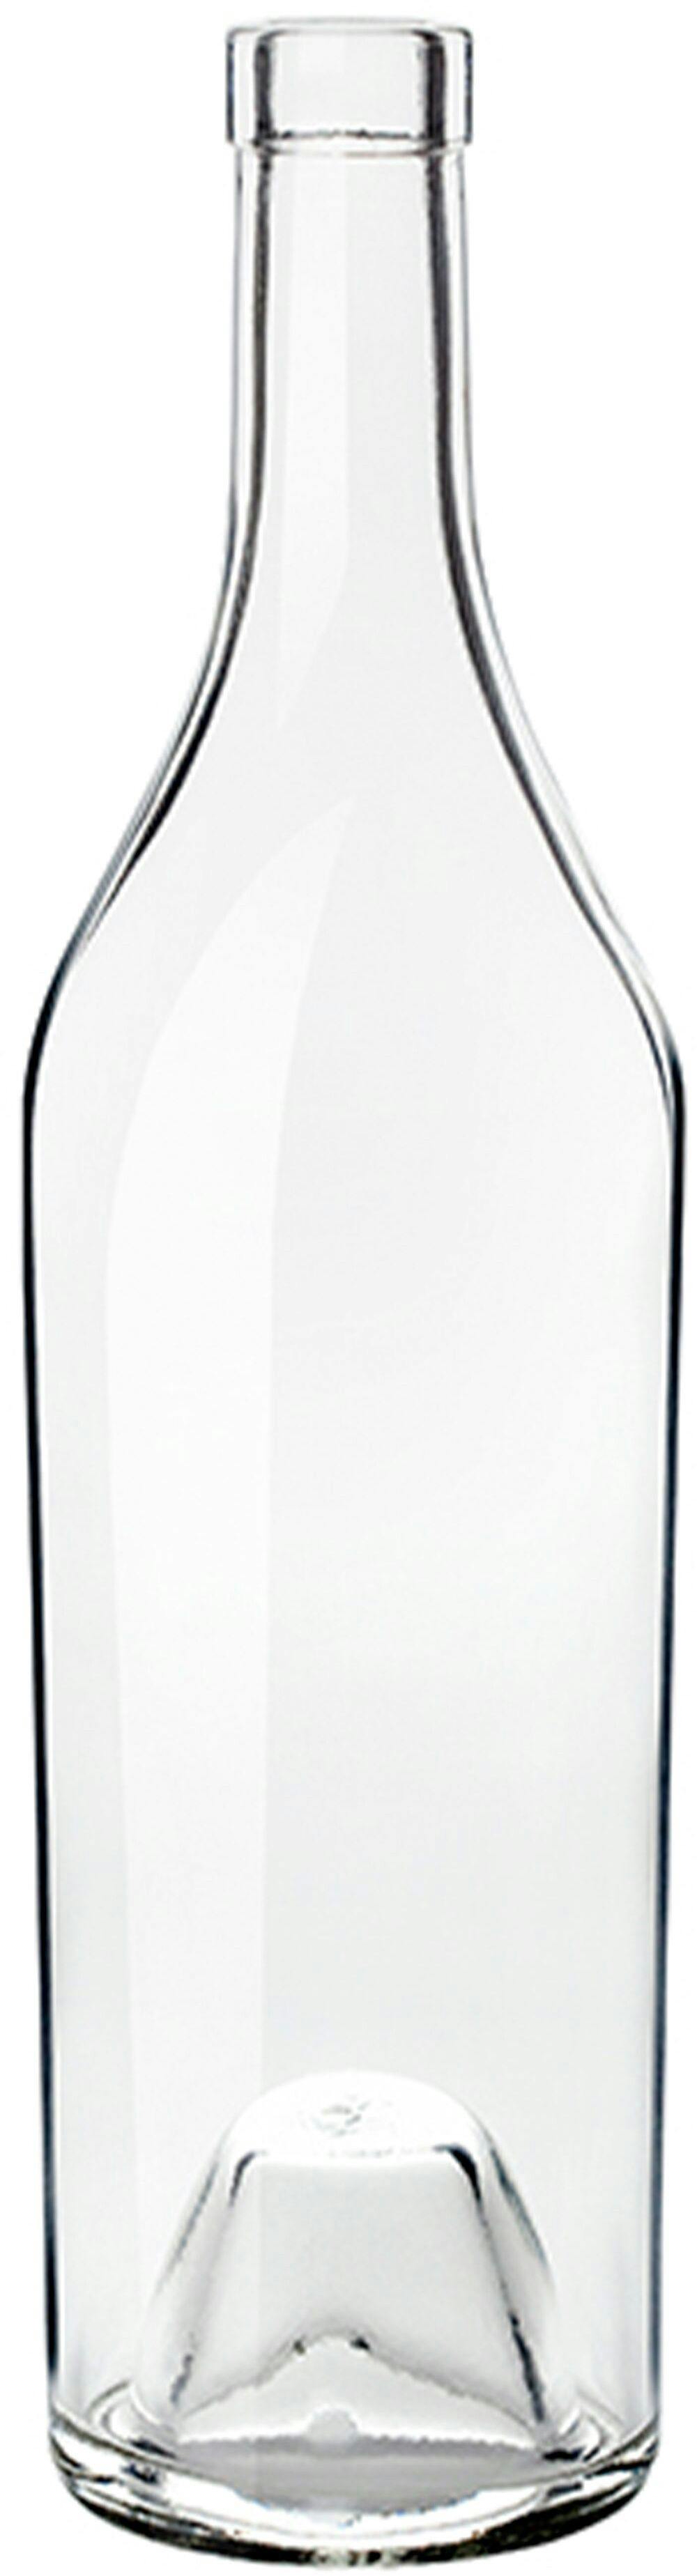 Bottle BORD GALAXI 750 F14 